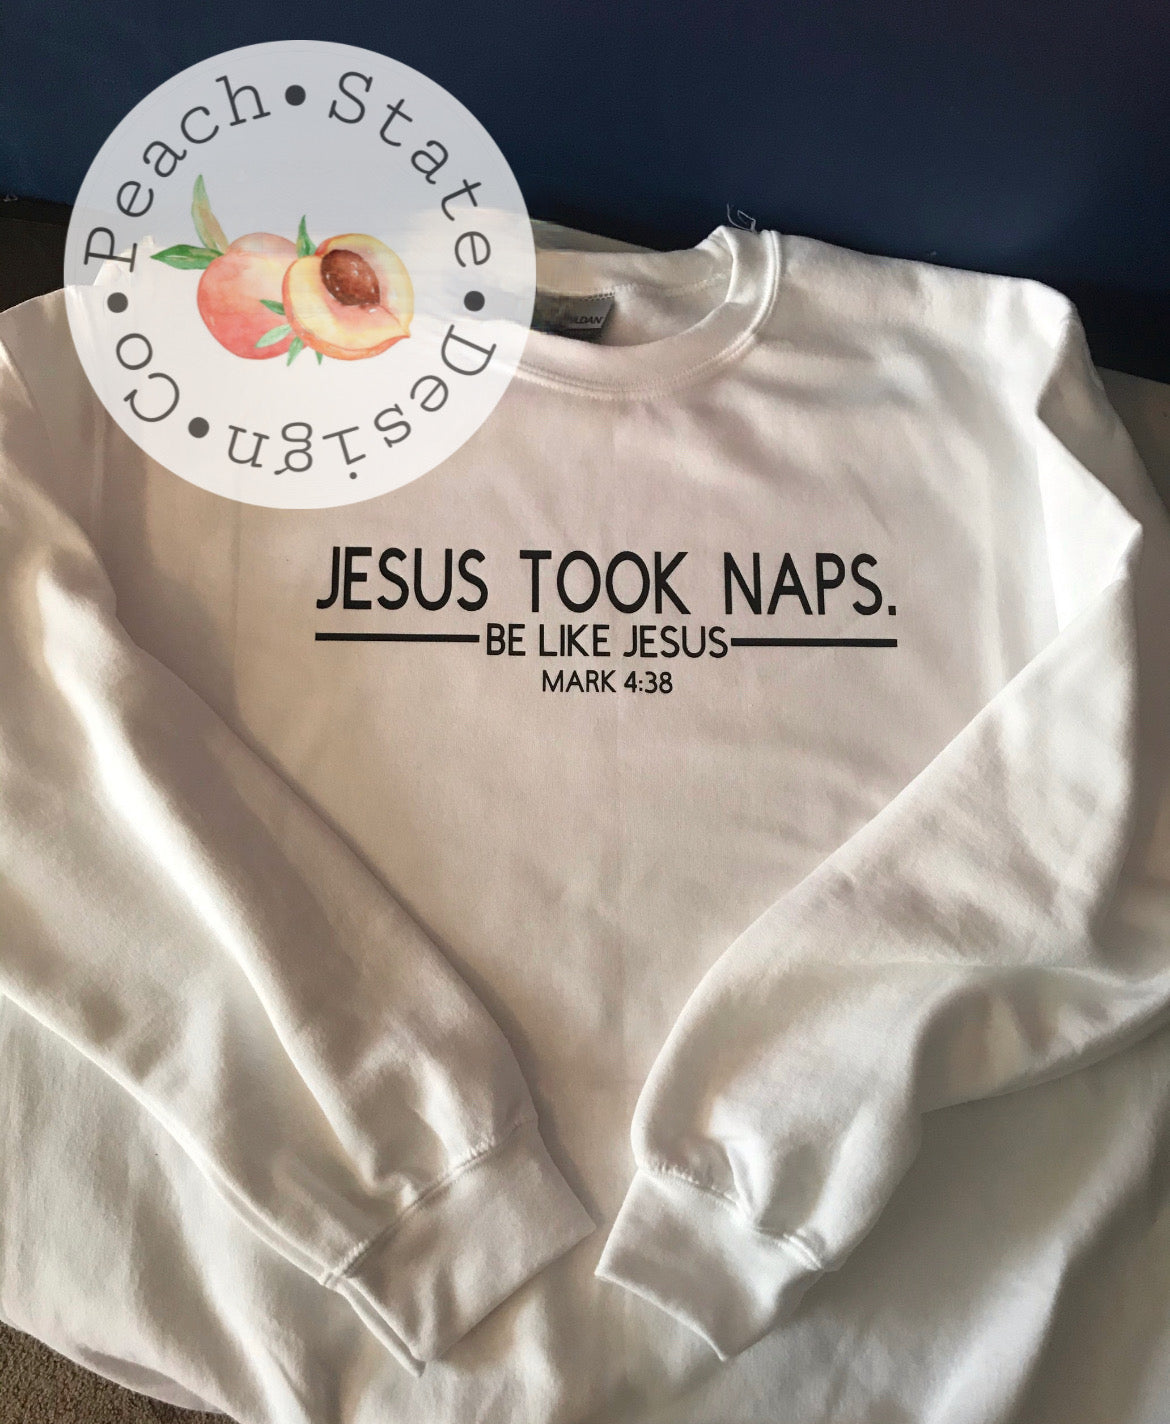 Jesus took naps, be like Jesus